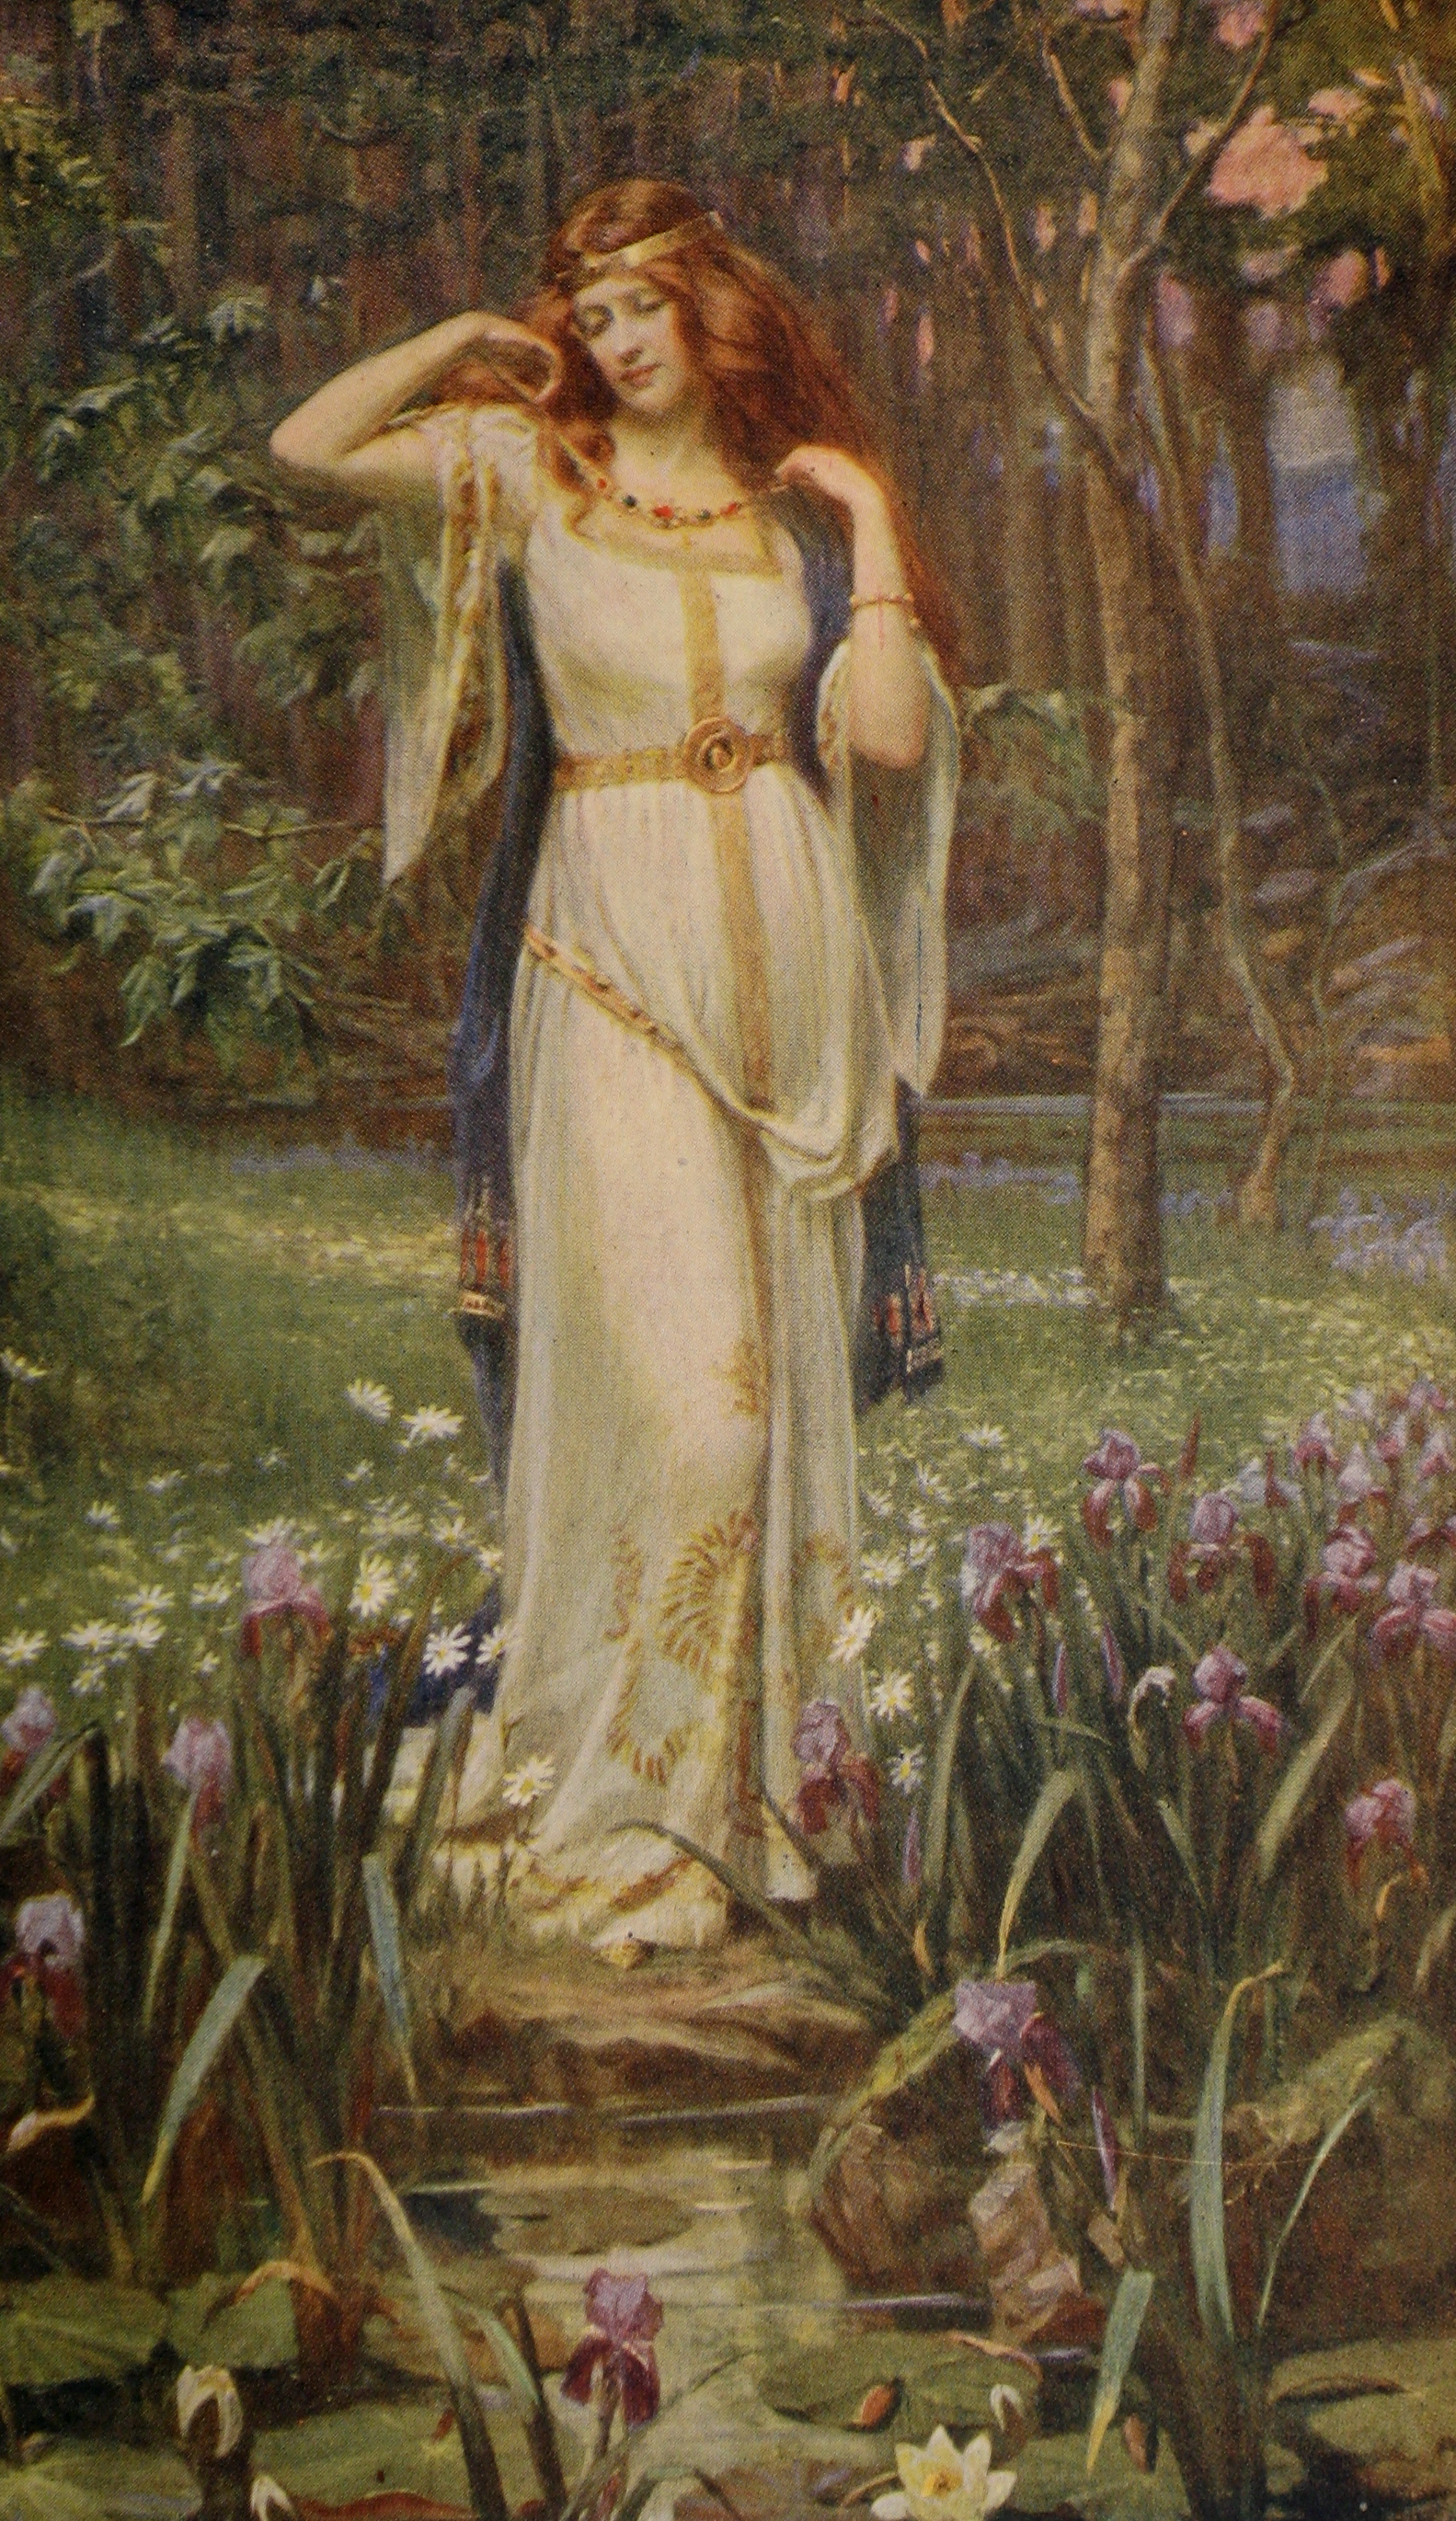 Cuadro "Freyja y su collar" del pintor Arthur Rackham.